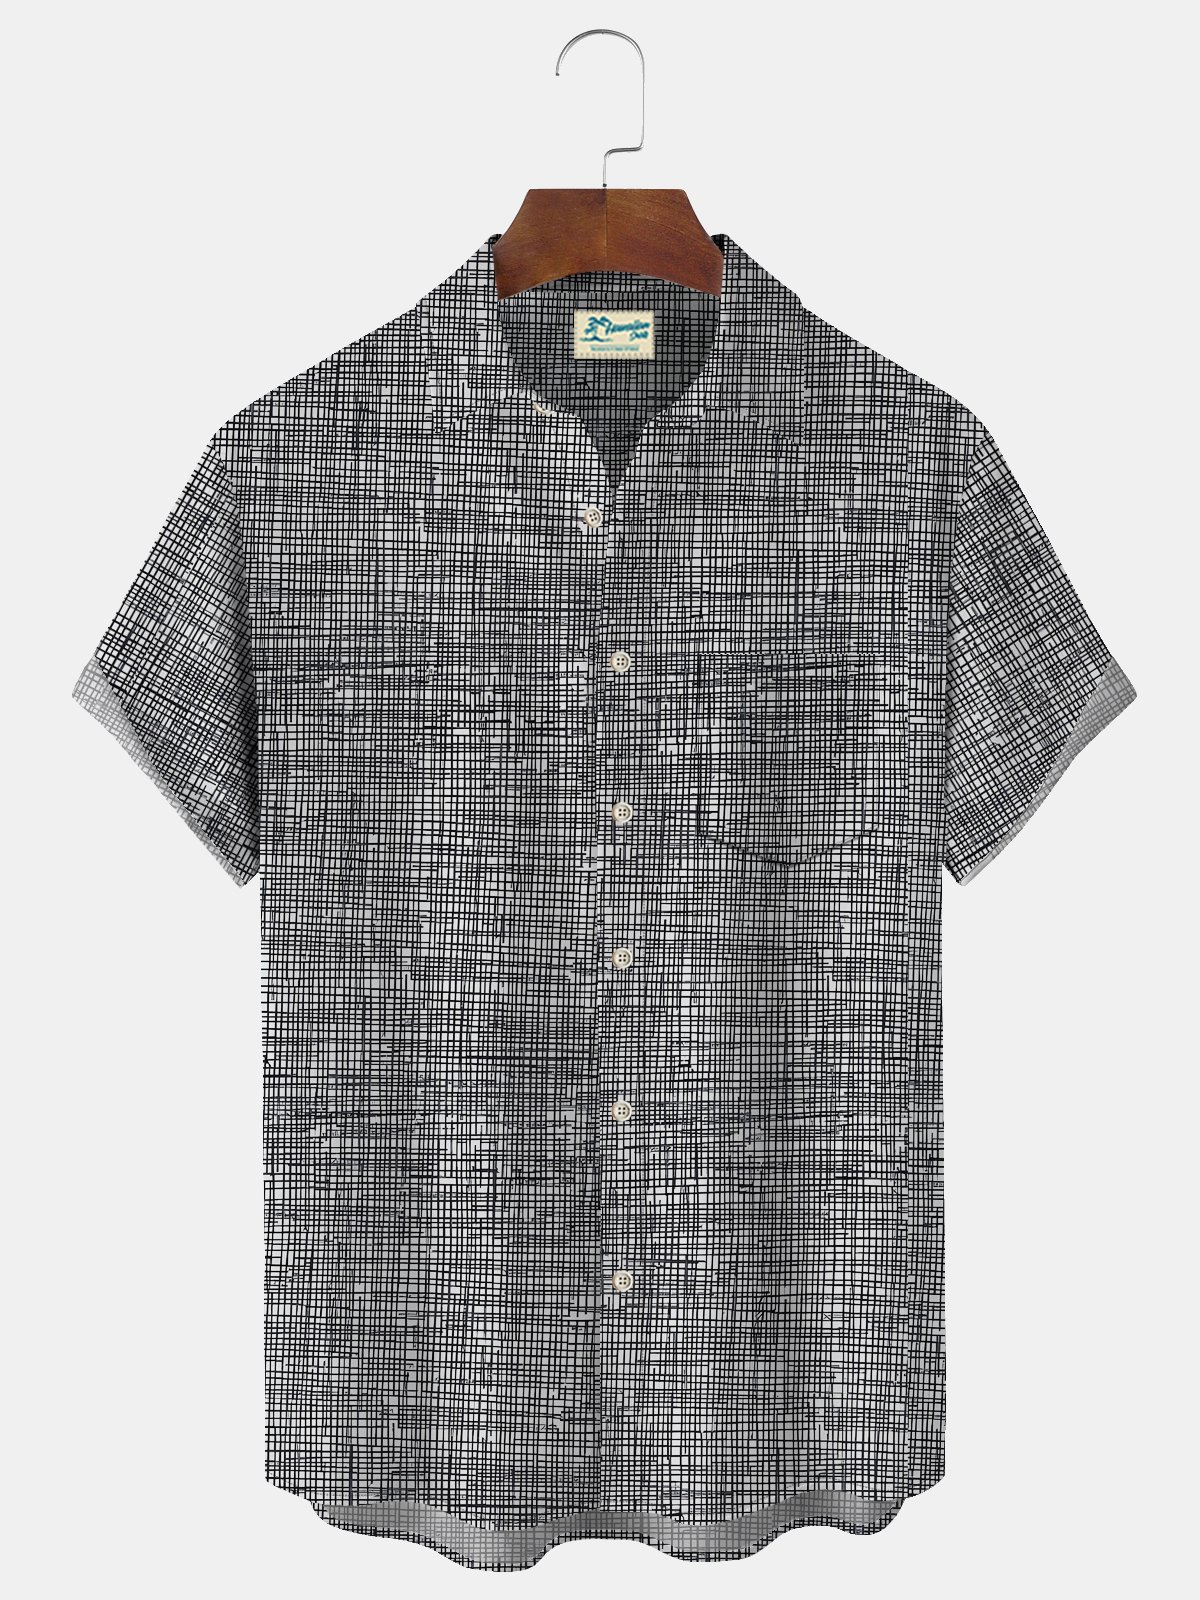 Royaura Vintage Geometric Art Gray Men's Hawaiian Shirts Stretch Check Aloha Camp Pocket Shirts